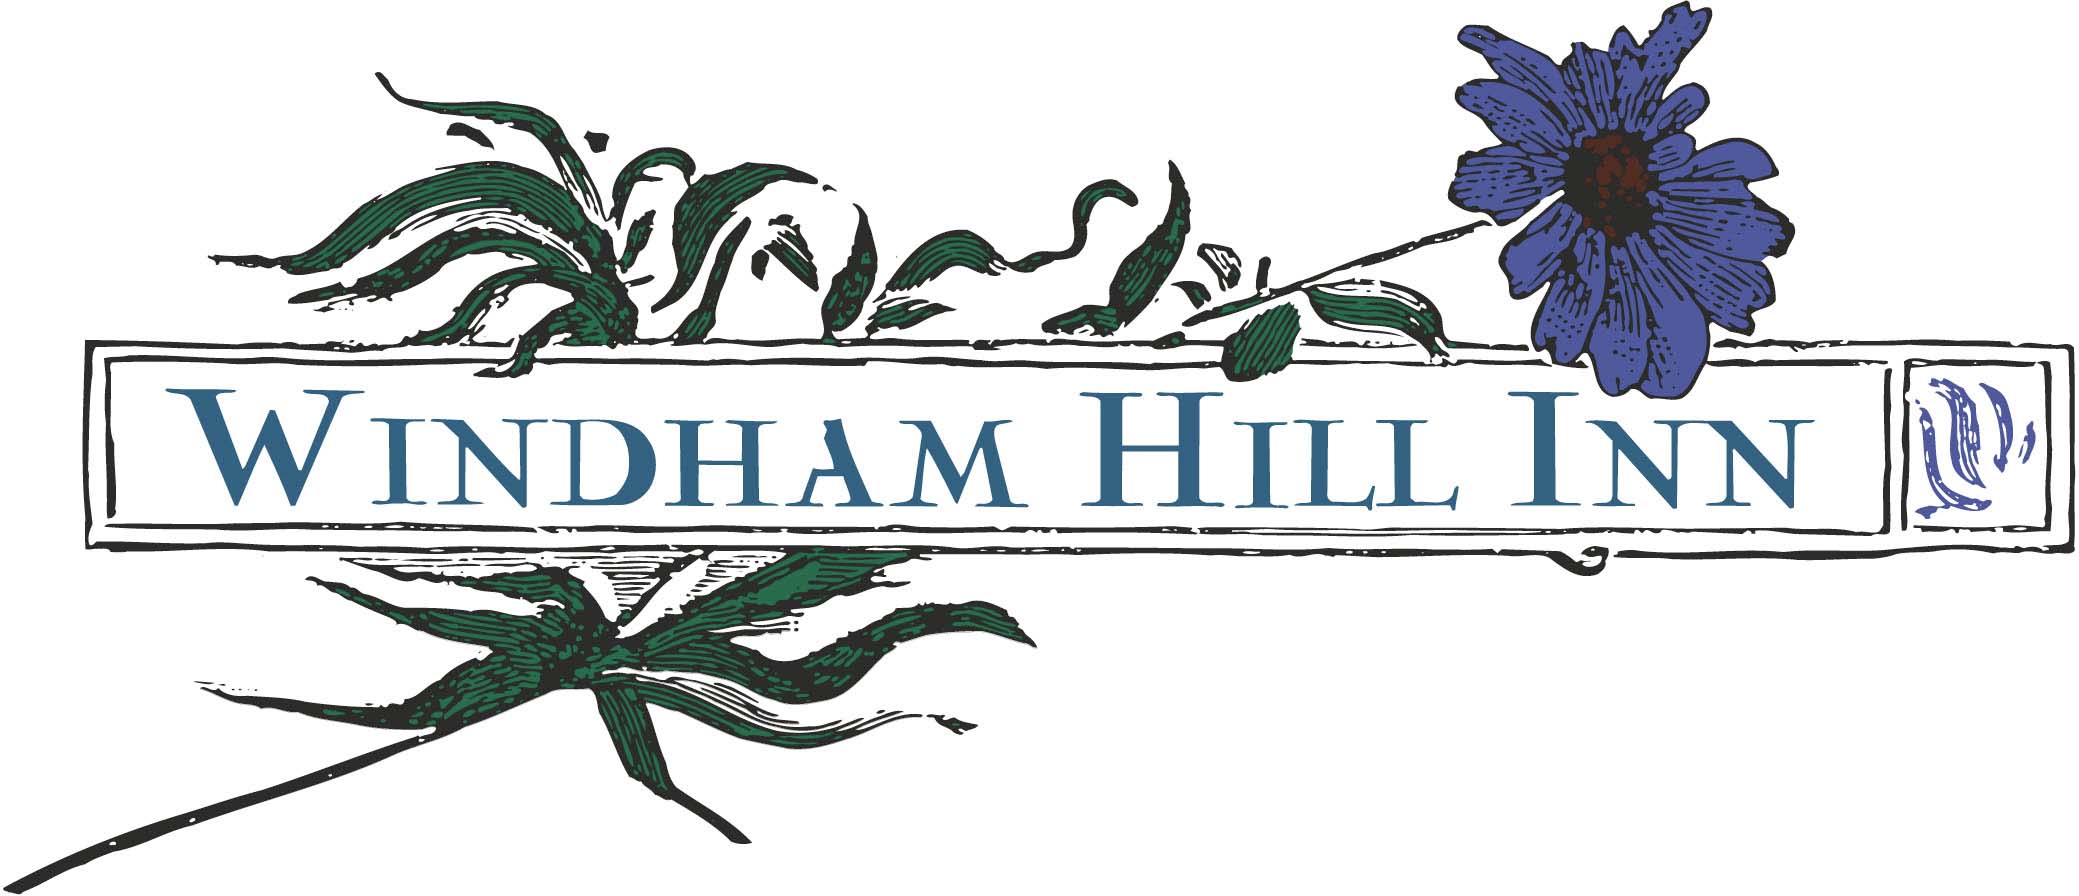 Windham Hill Inn